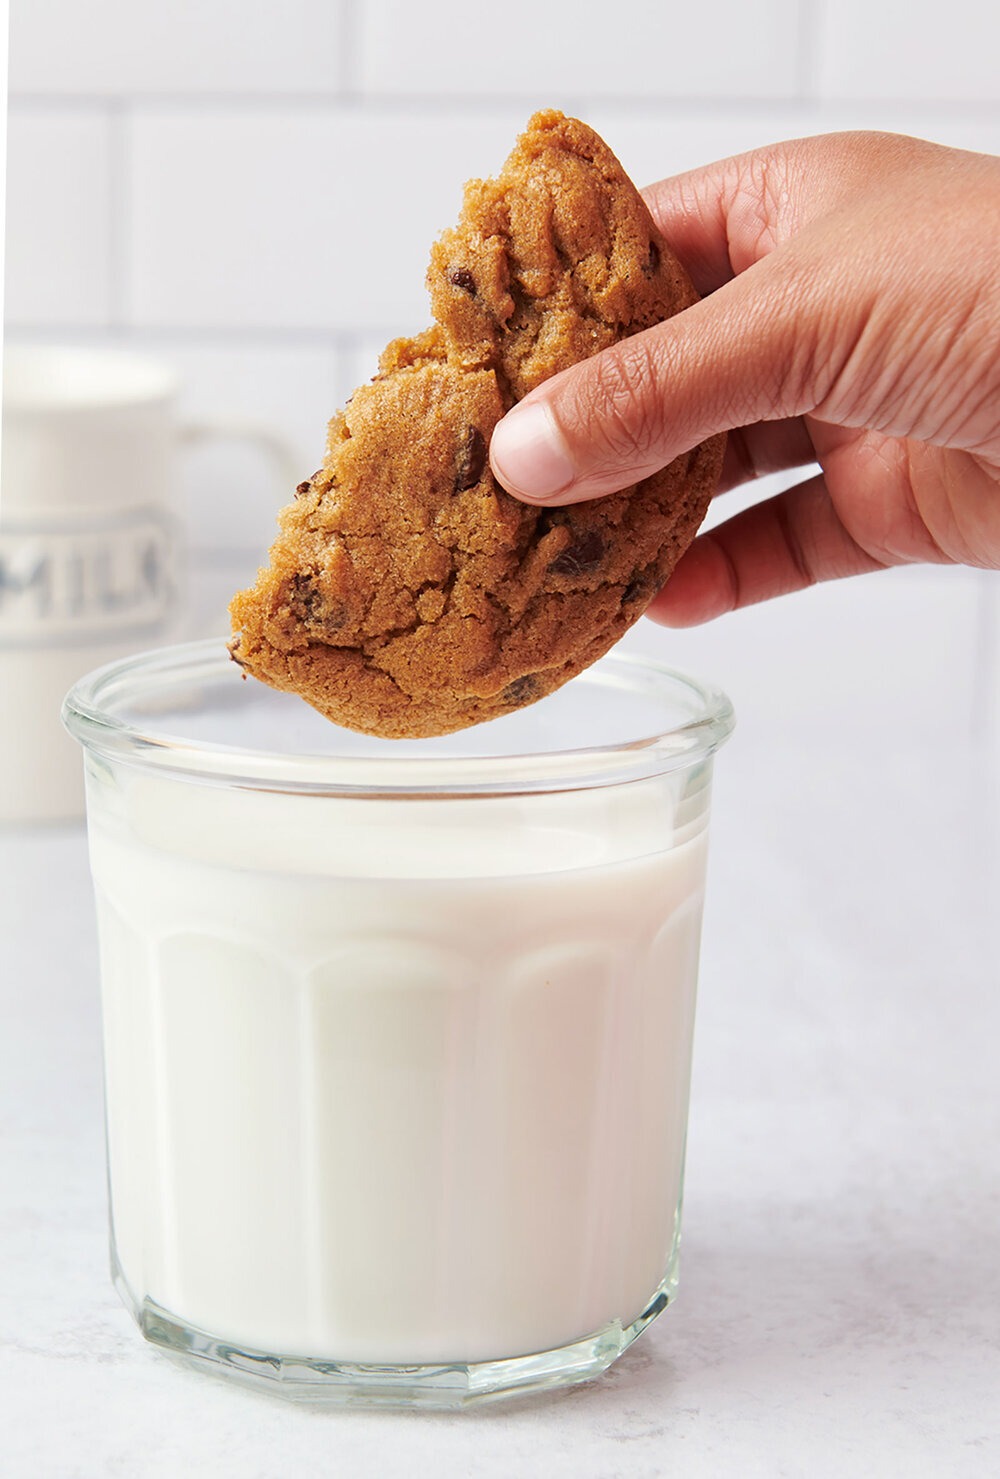 Pacific-Cookie-Company-Cookie-Hand-Milk2.jpg